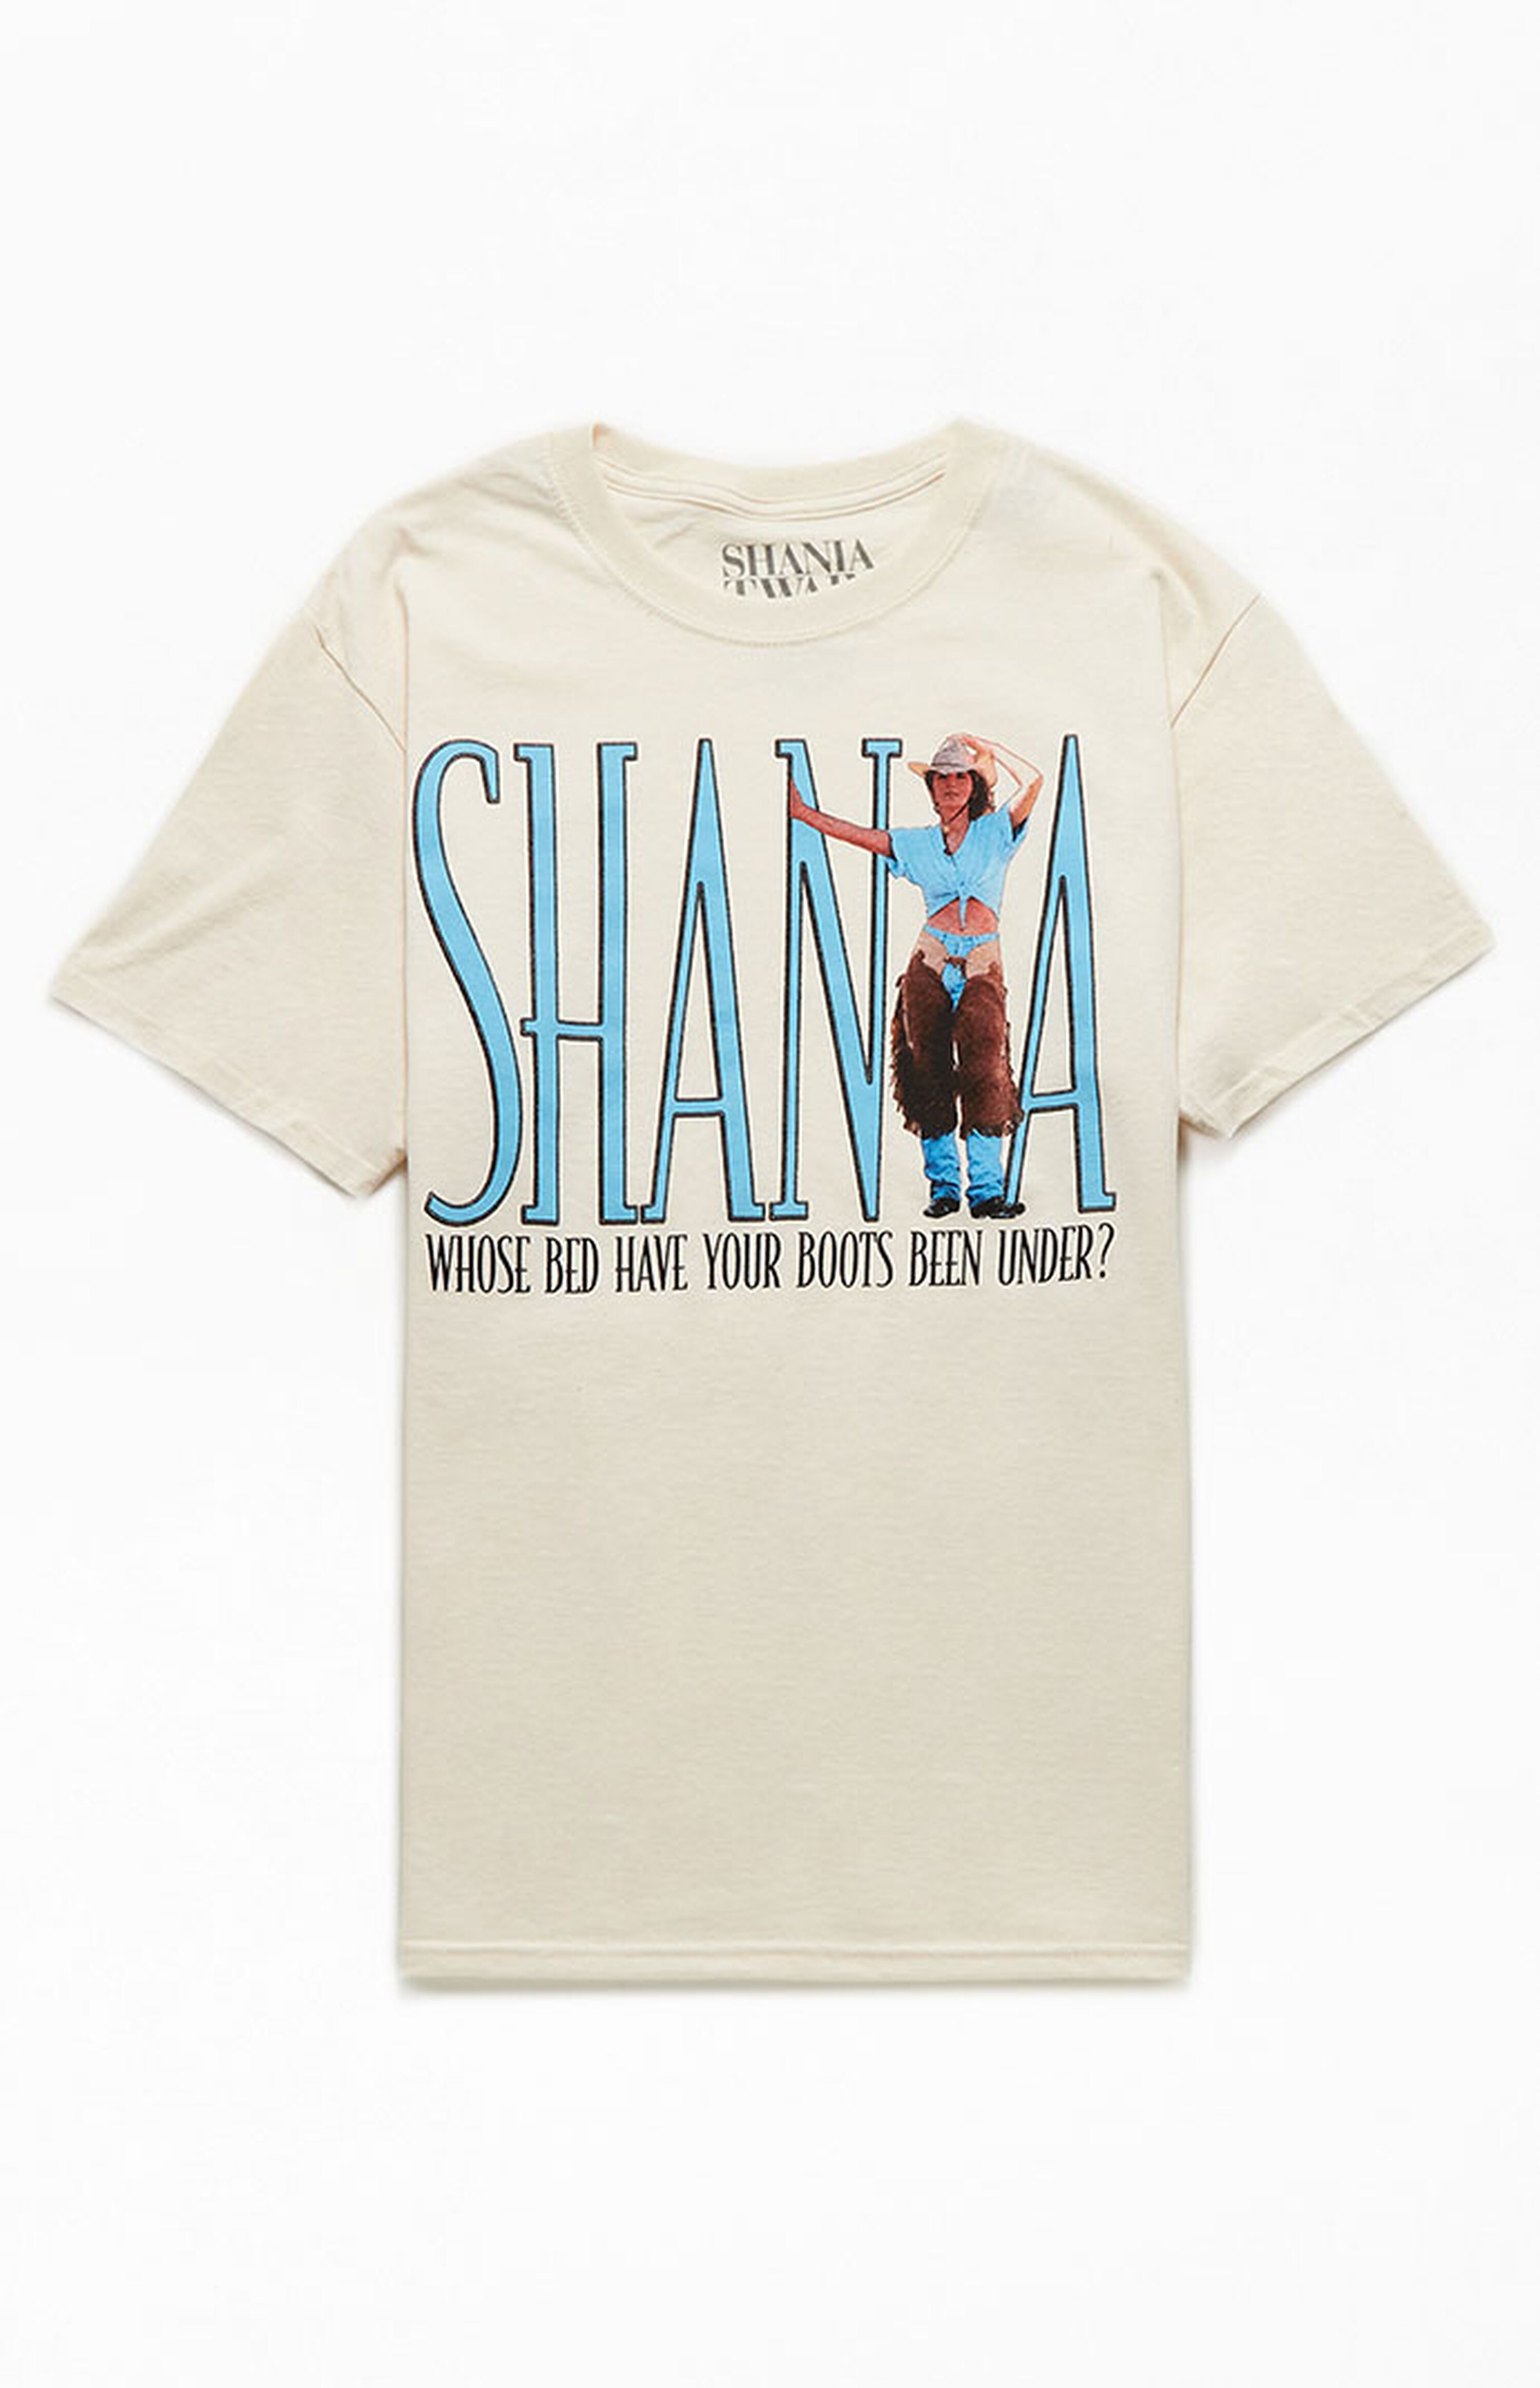 Shania Twain T-Shirt | PacSun